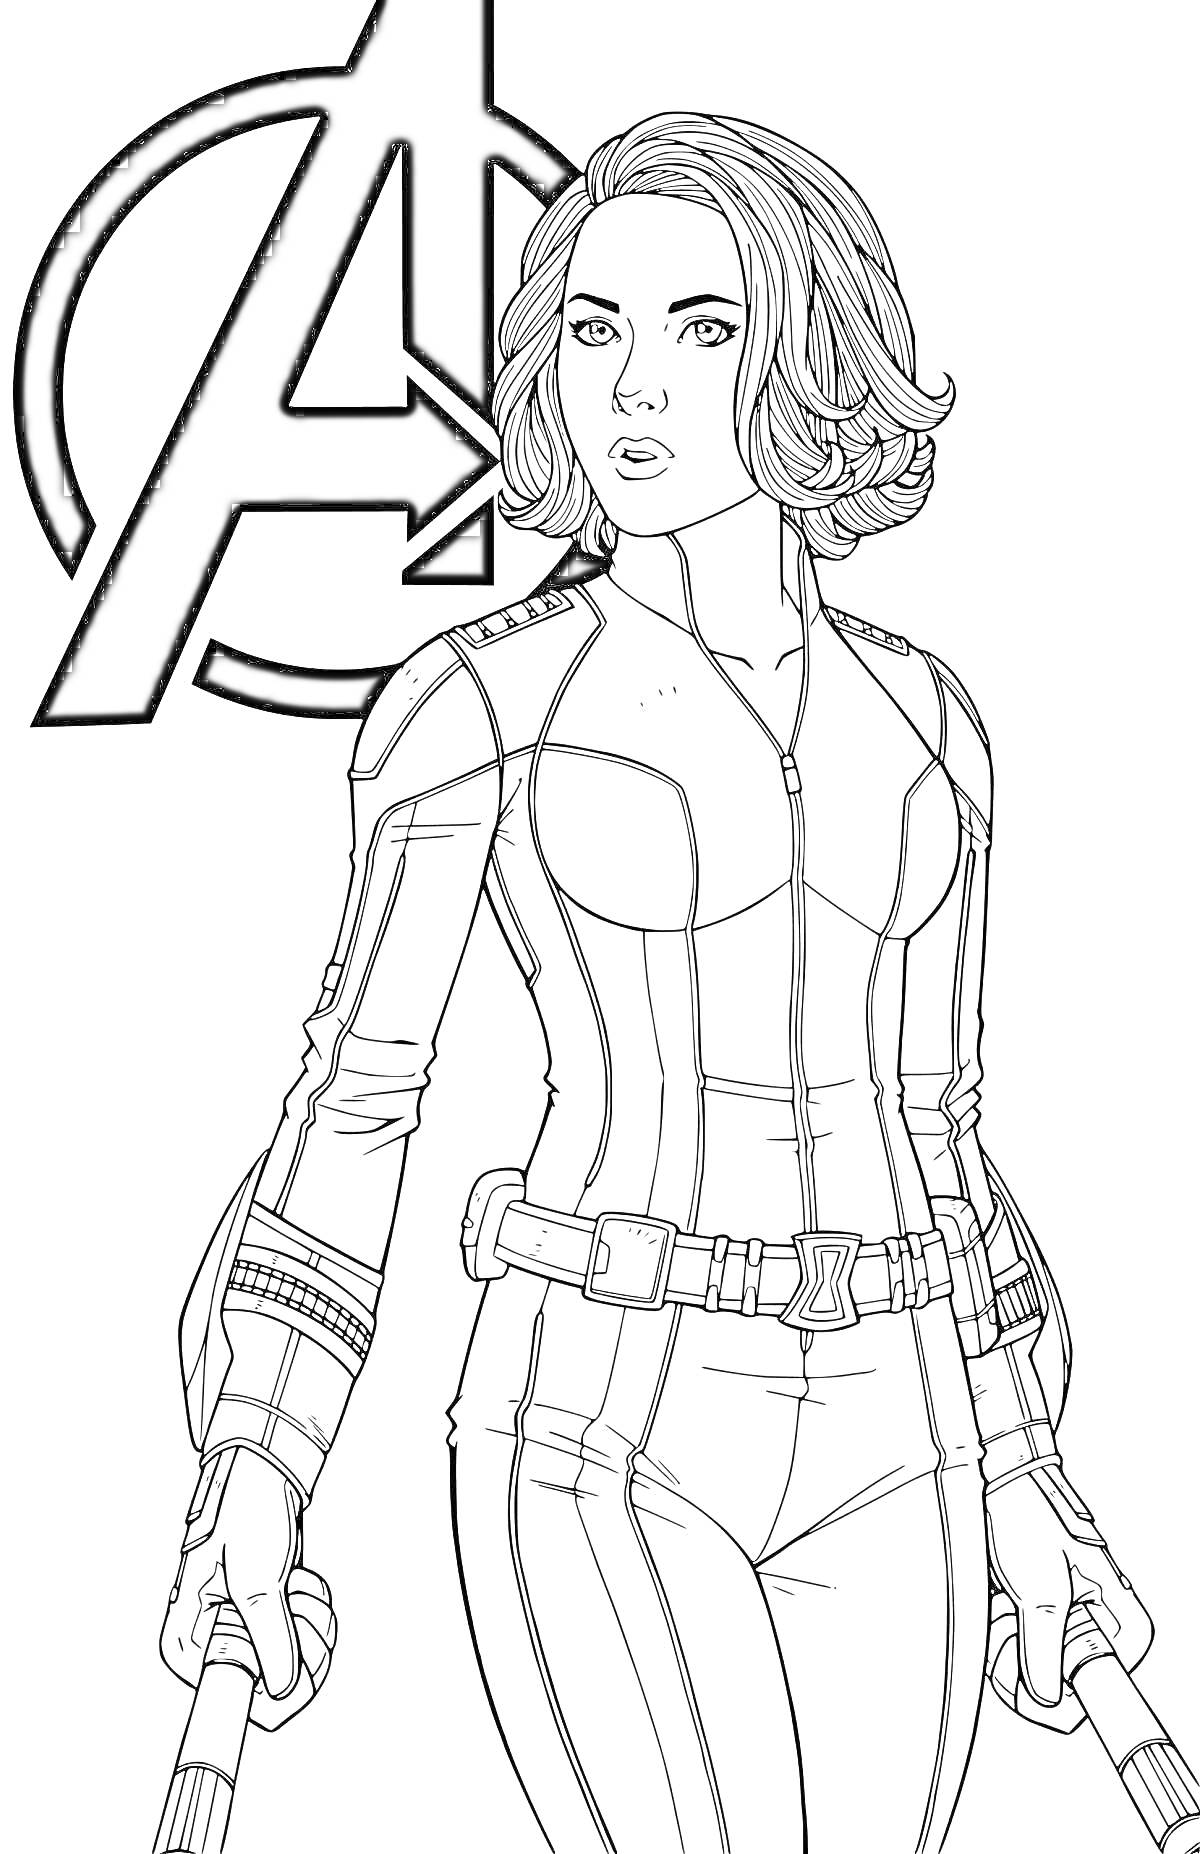 РаскраскаЧерная Вдова в костюме с жезлами на фоне логотипа Мстителей